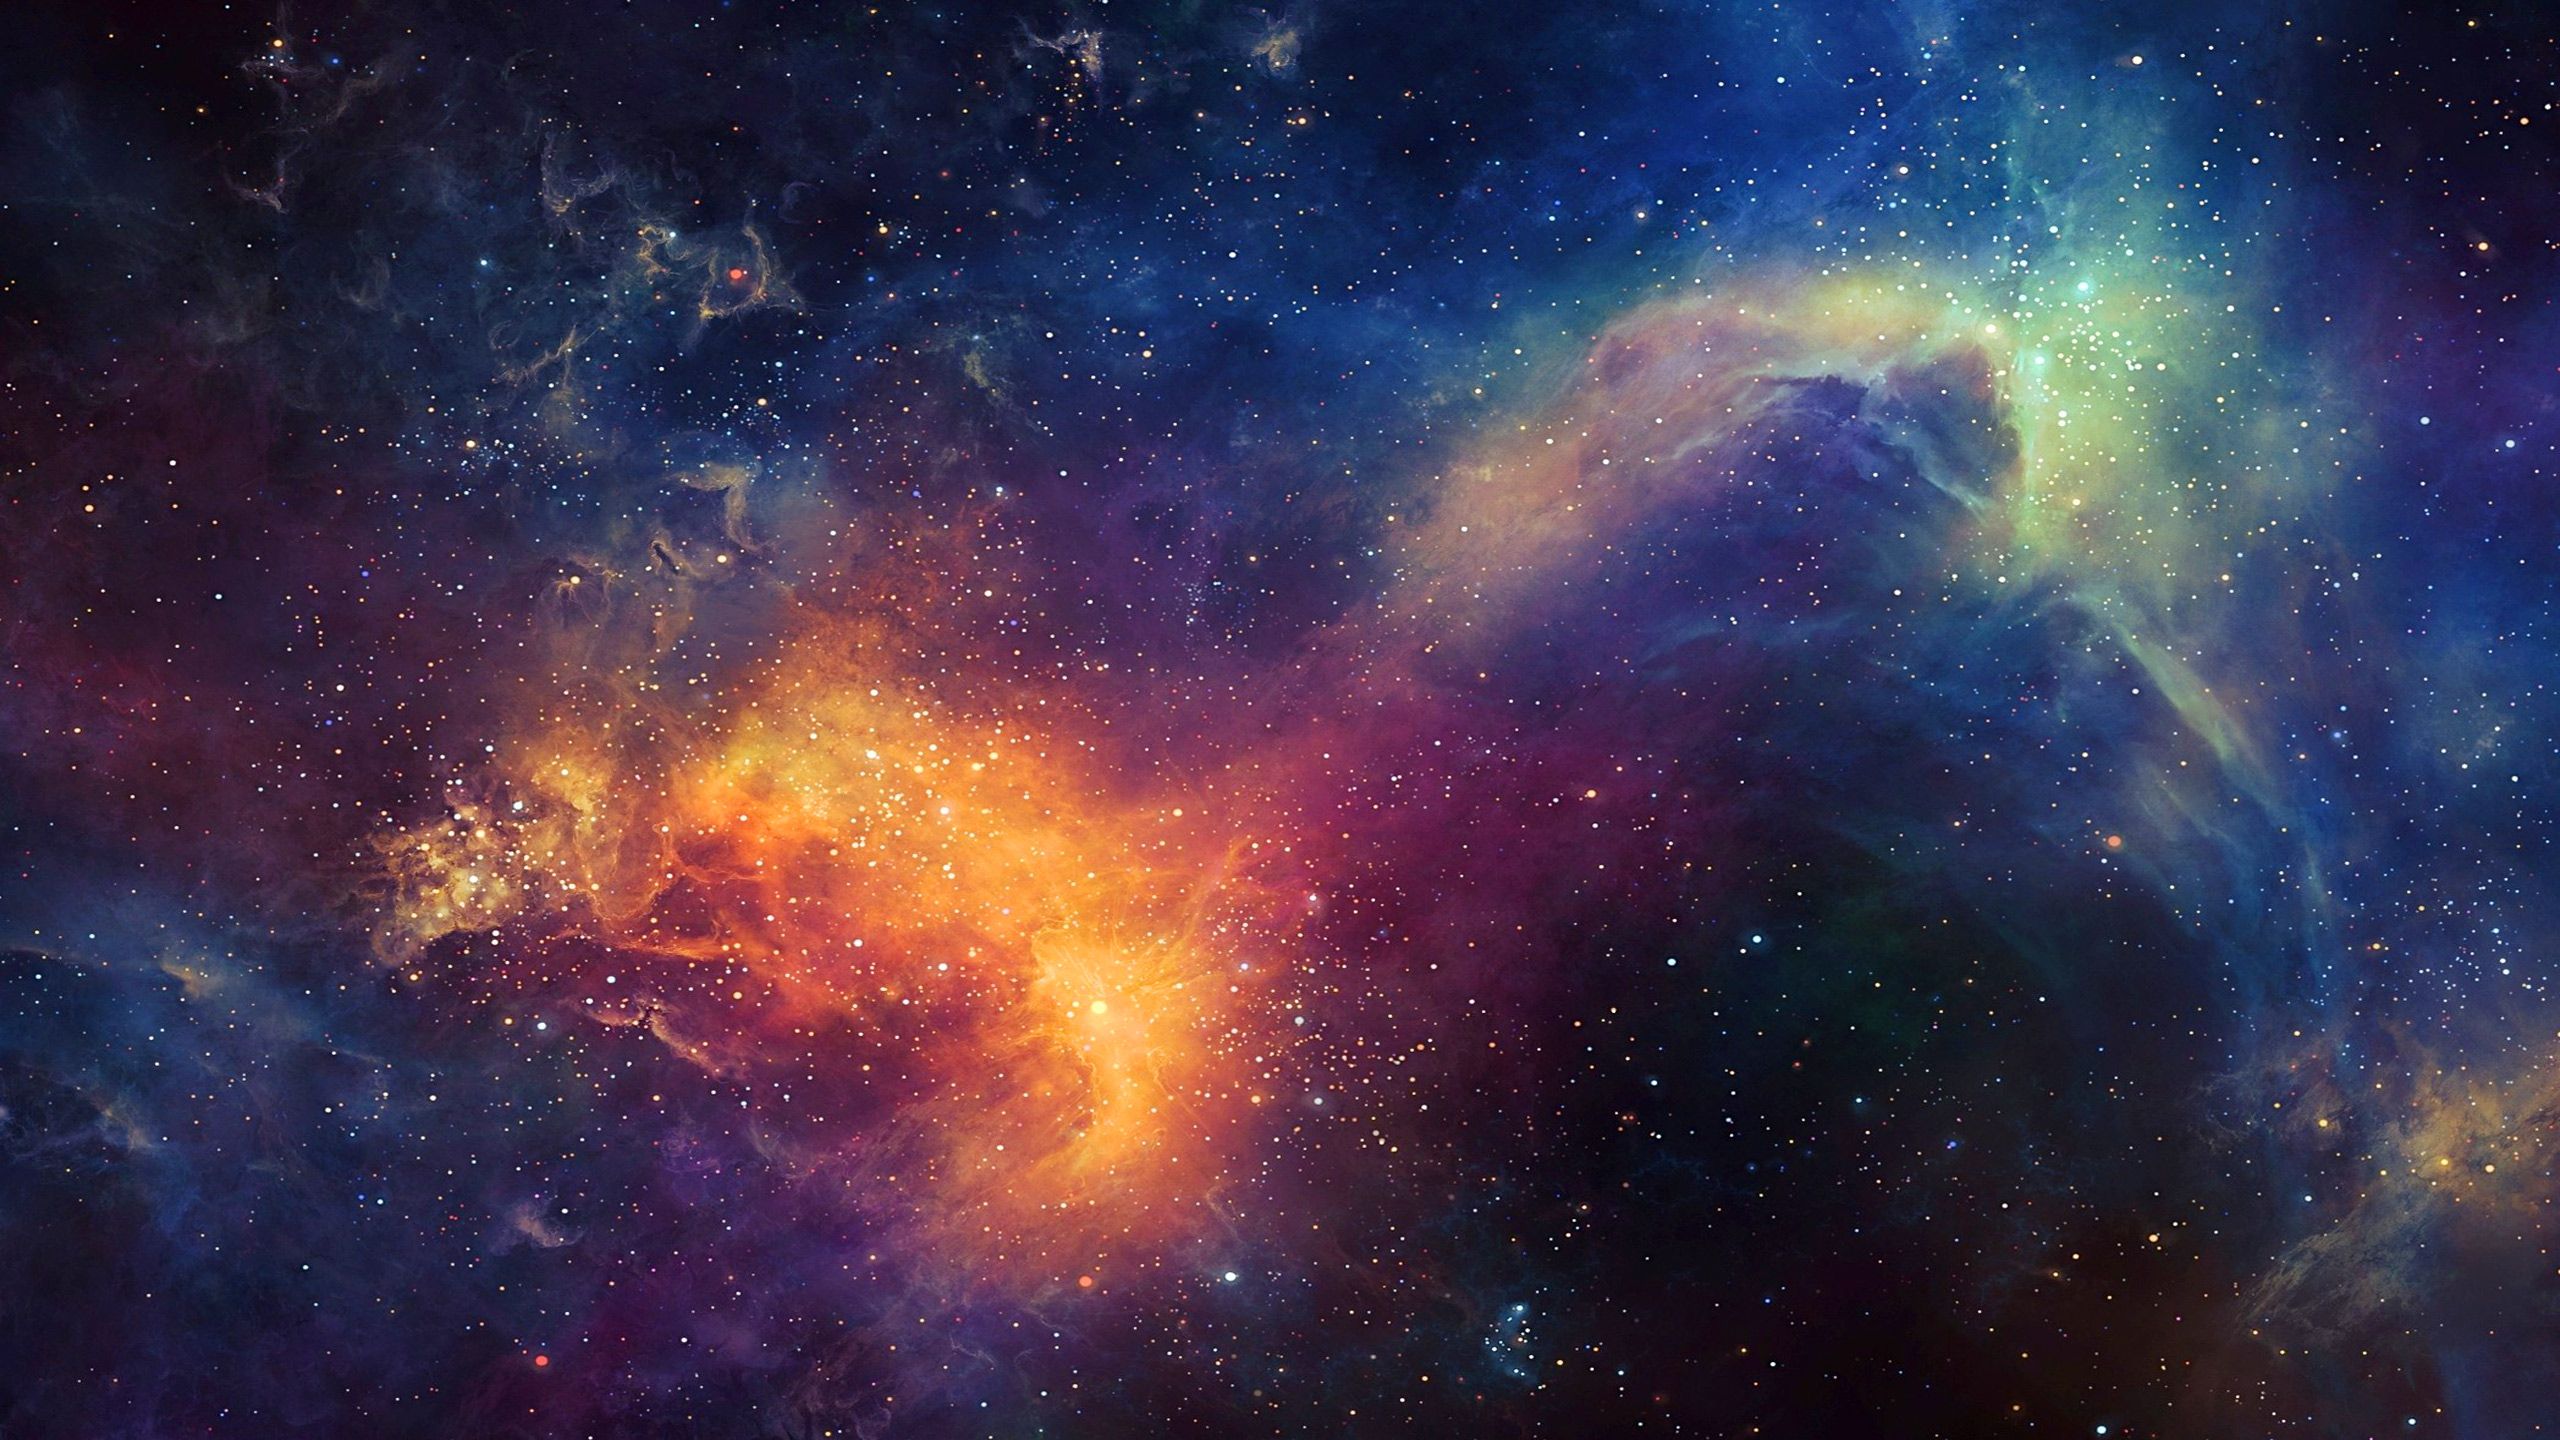 Galaxy Stars Space Digital Art 4K Wallpaper iPhone HD Phone 1010i